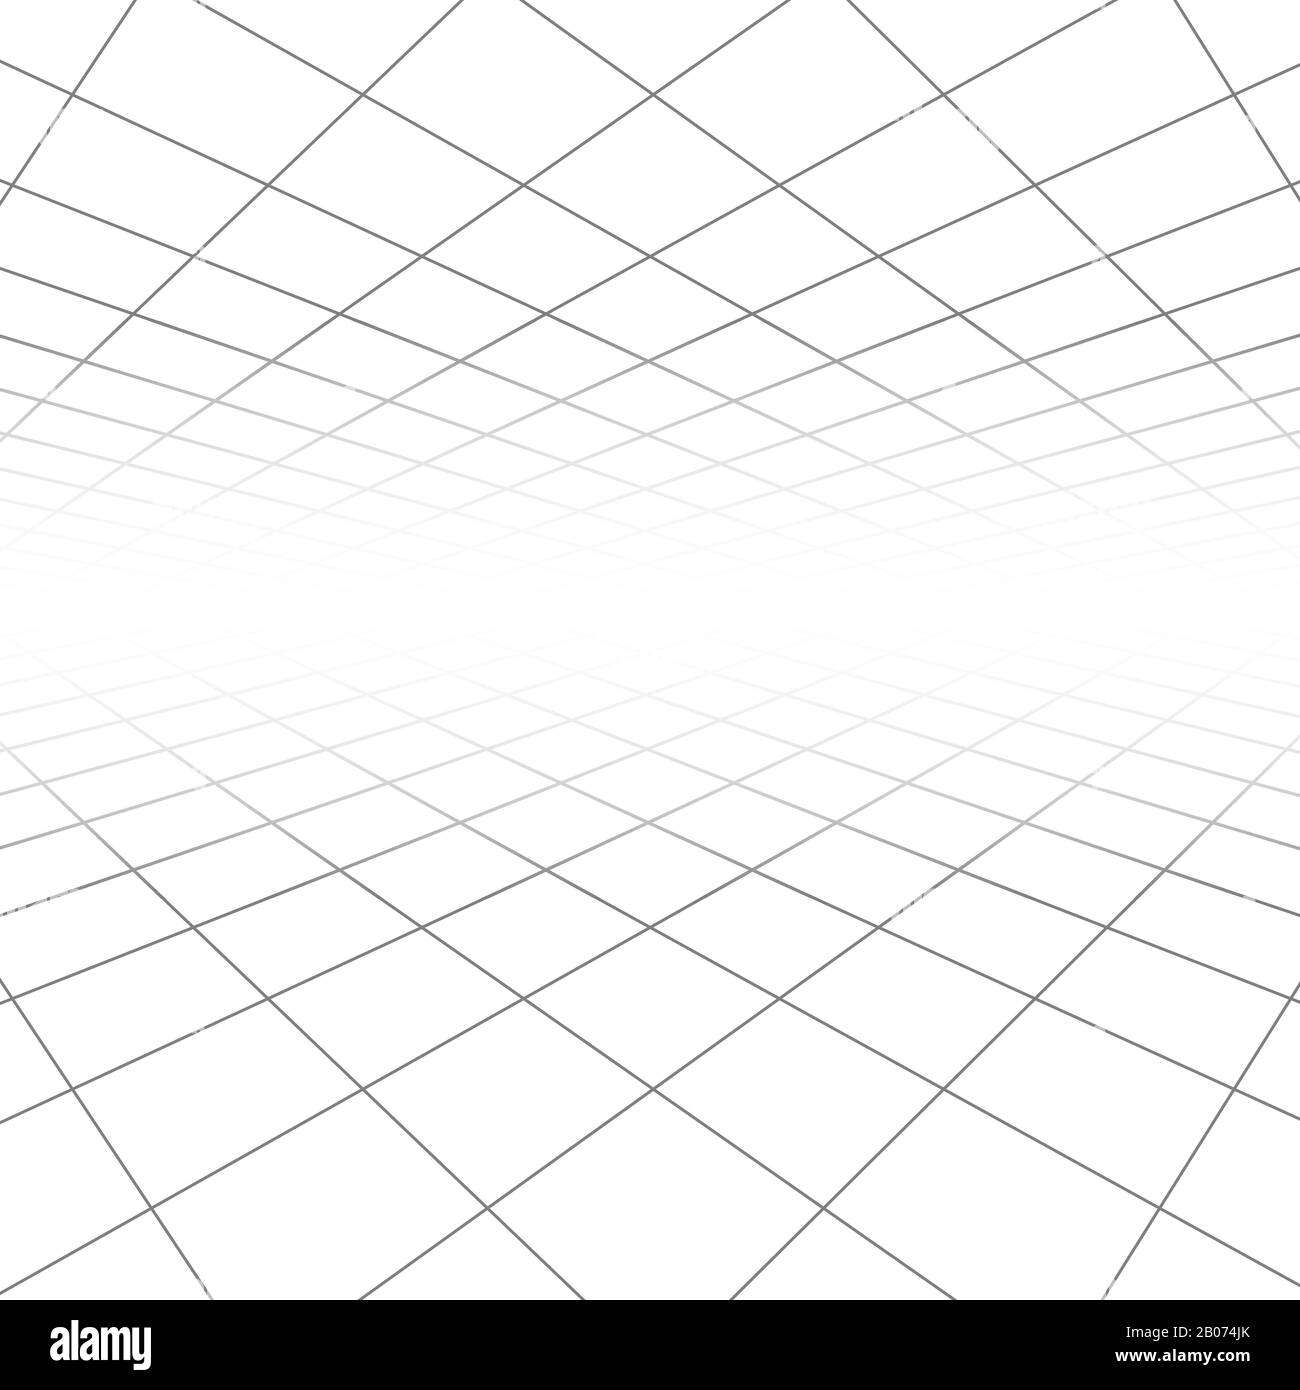 Decken- und Bodenfliesentextur, 3D-Linien in perspektivischer Sicht abstrakter geometrischer Hintergrund. Lineare Abbildung des linearen Gitters "Space Infinity" Stock Vektor